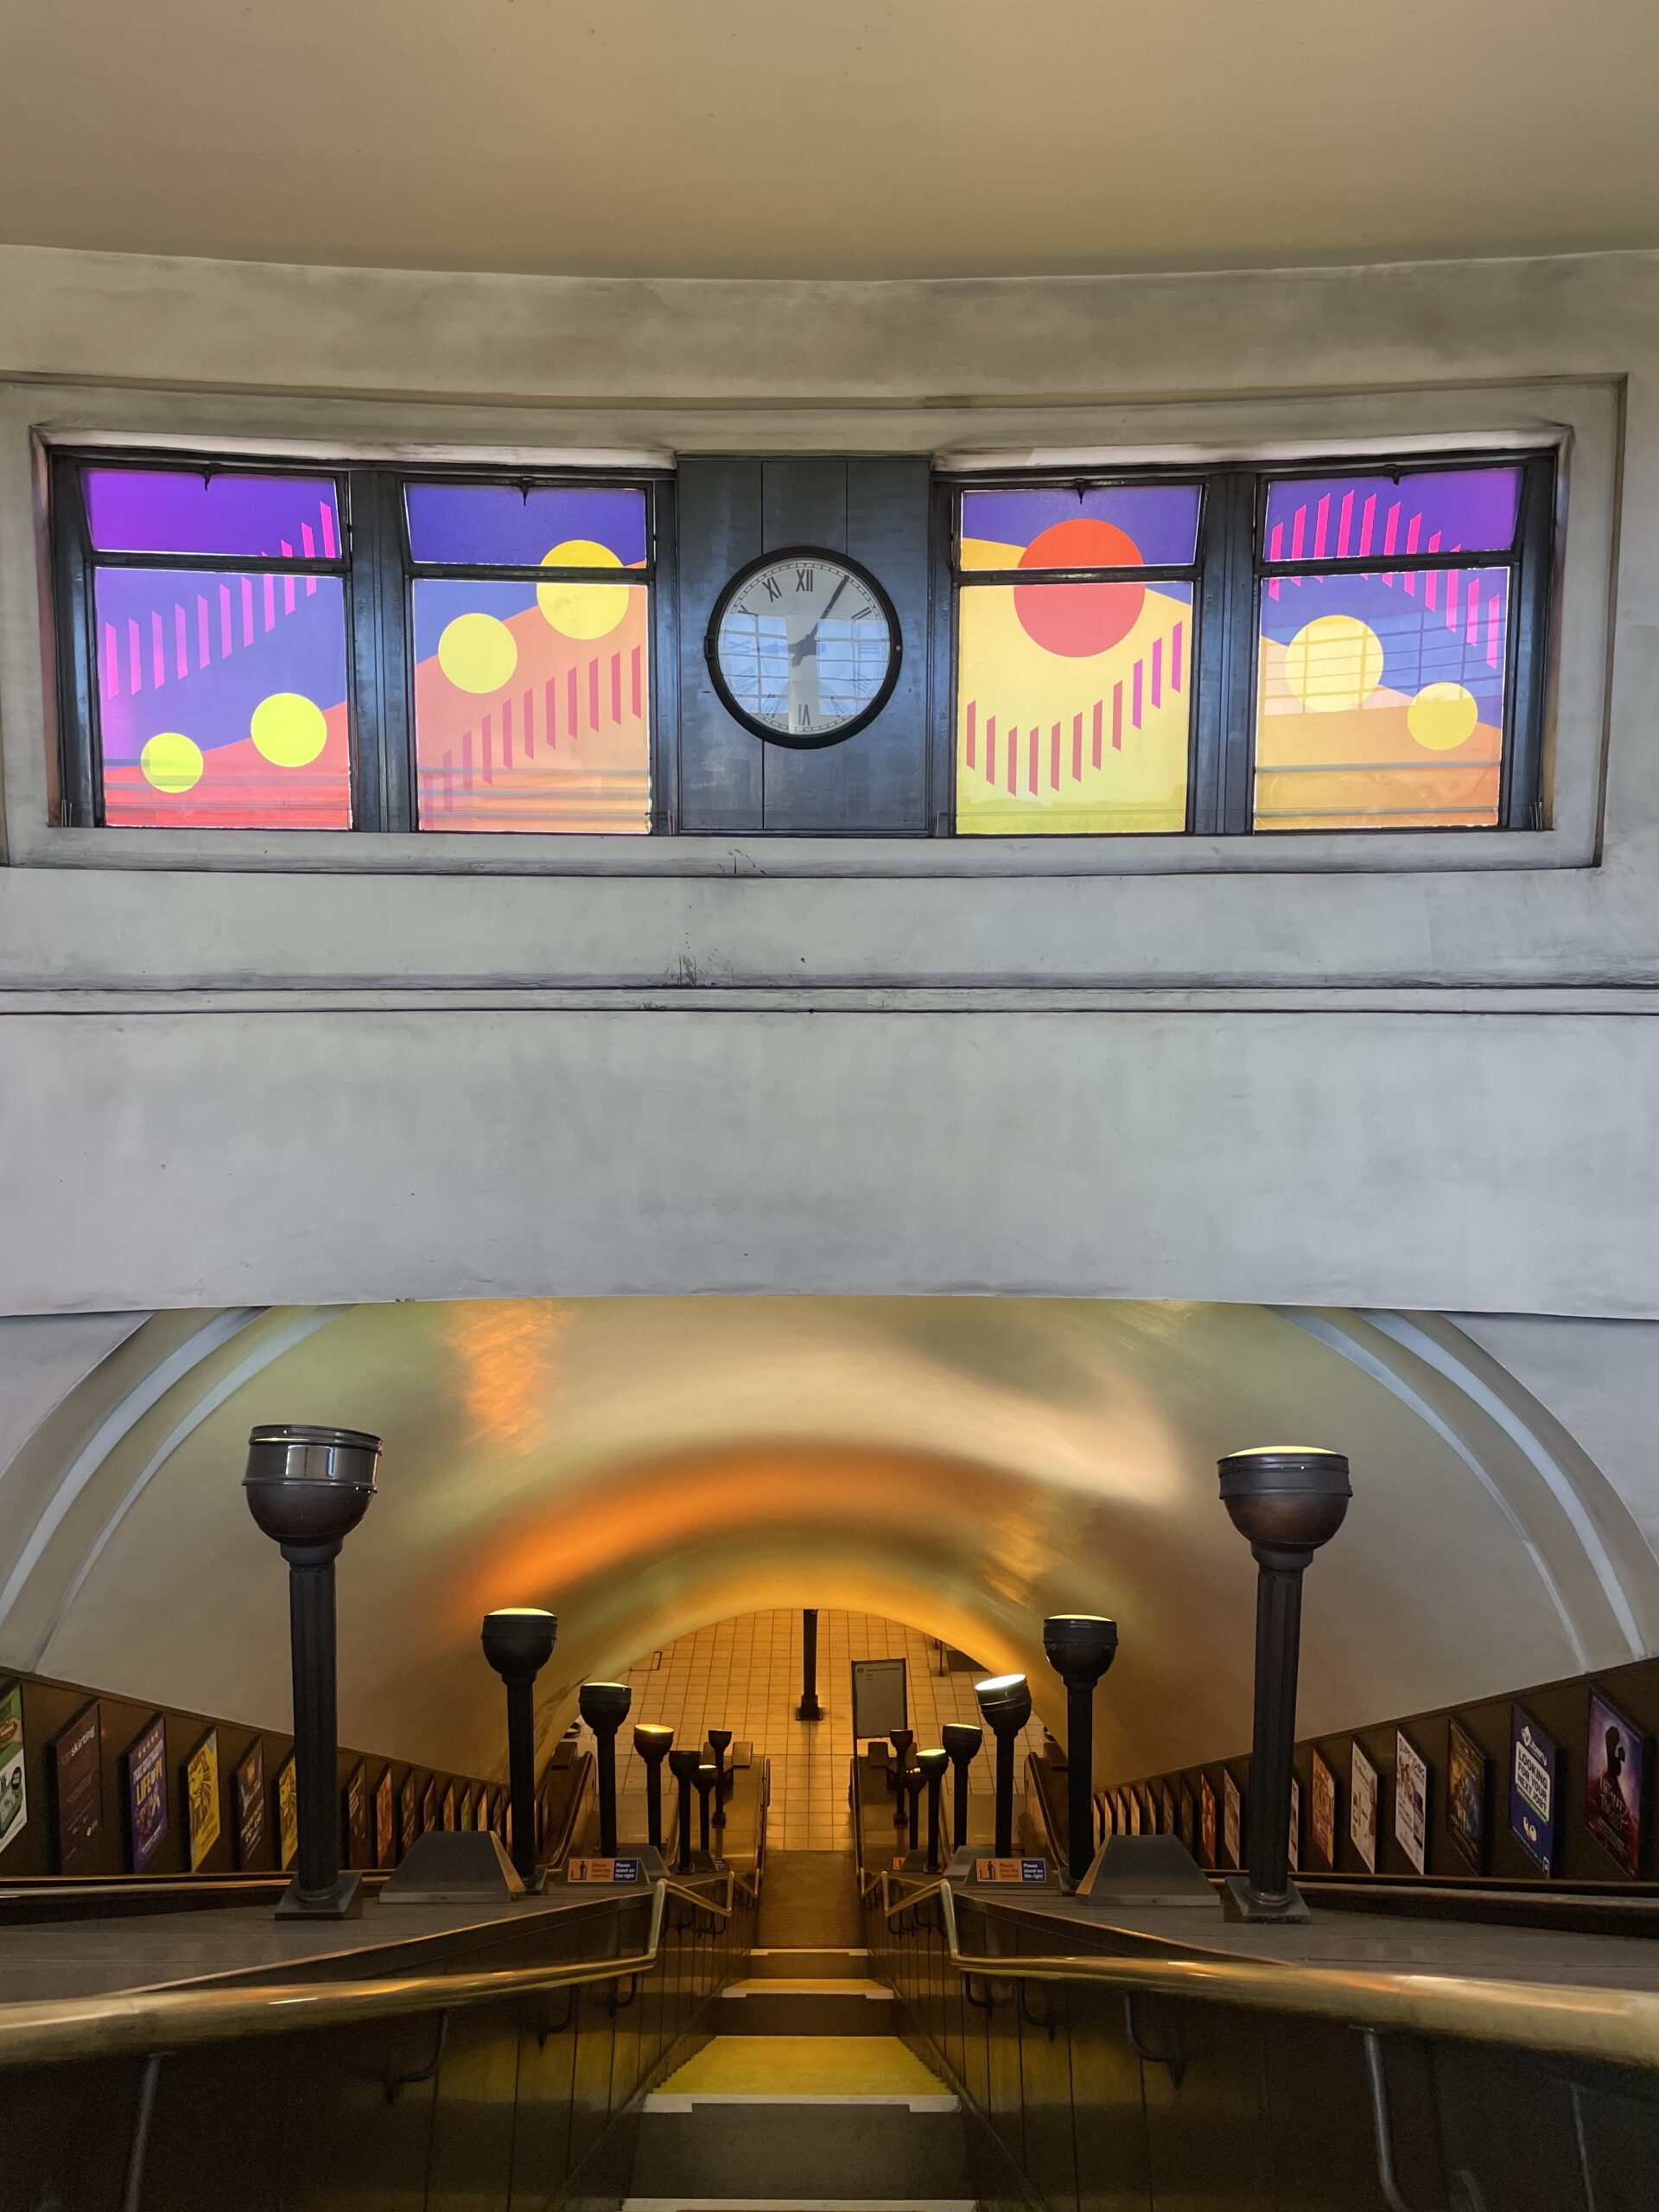 Southgate station artwork over escalator inside view © Dan Maier